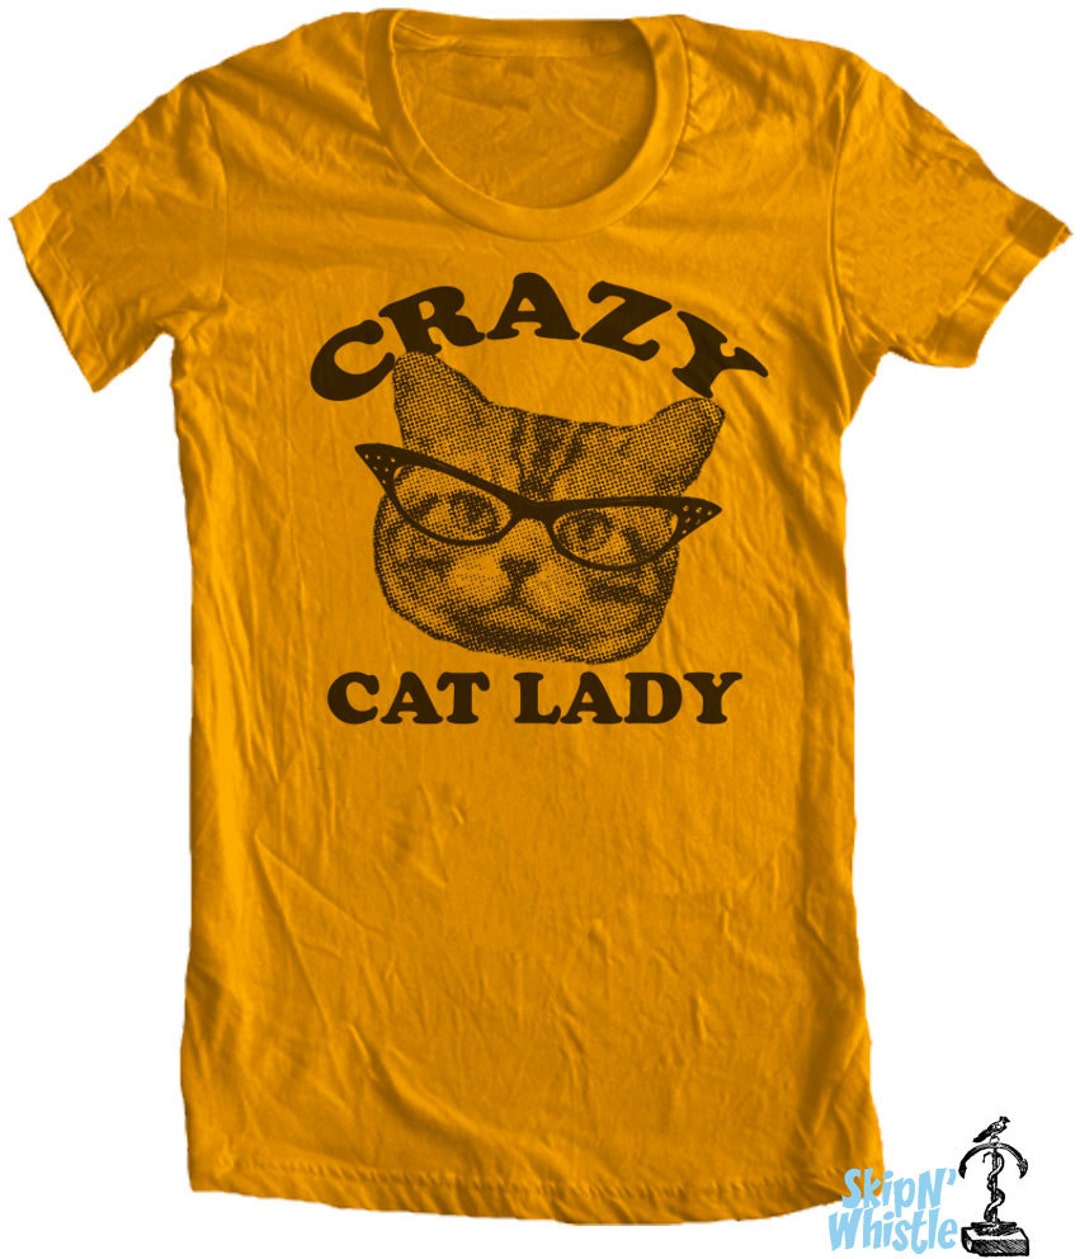 Crazy Cat Lady T Shirt American Apparel S M L Xl 6 Colors Etsy 